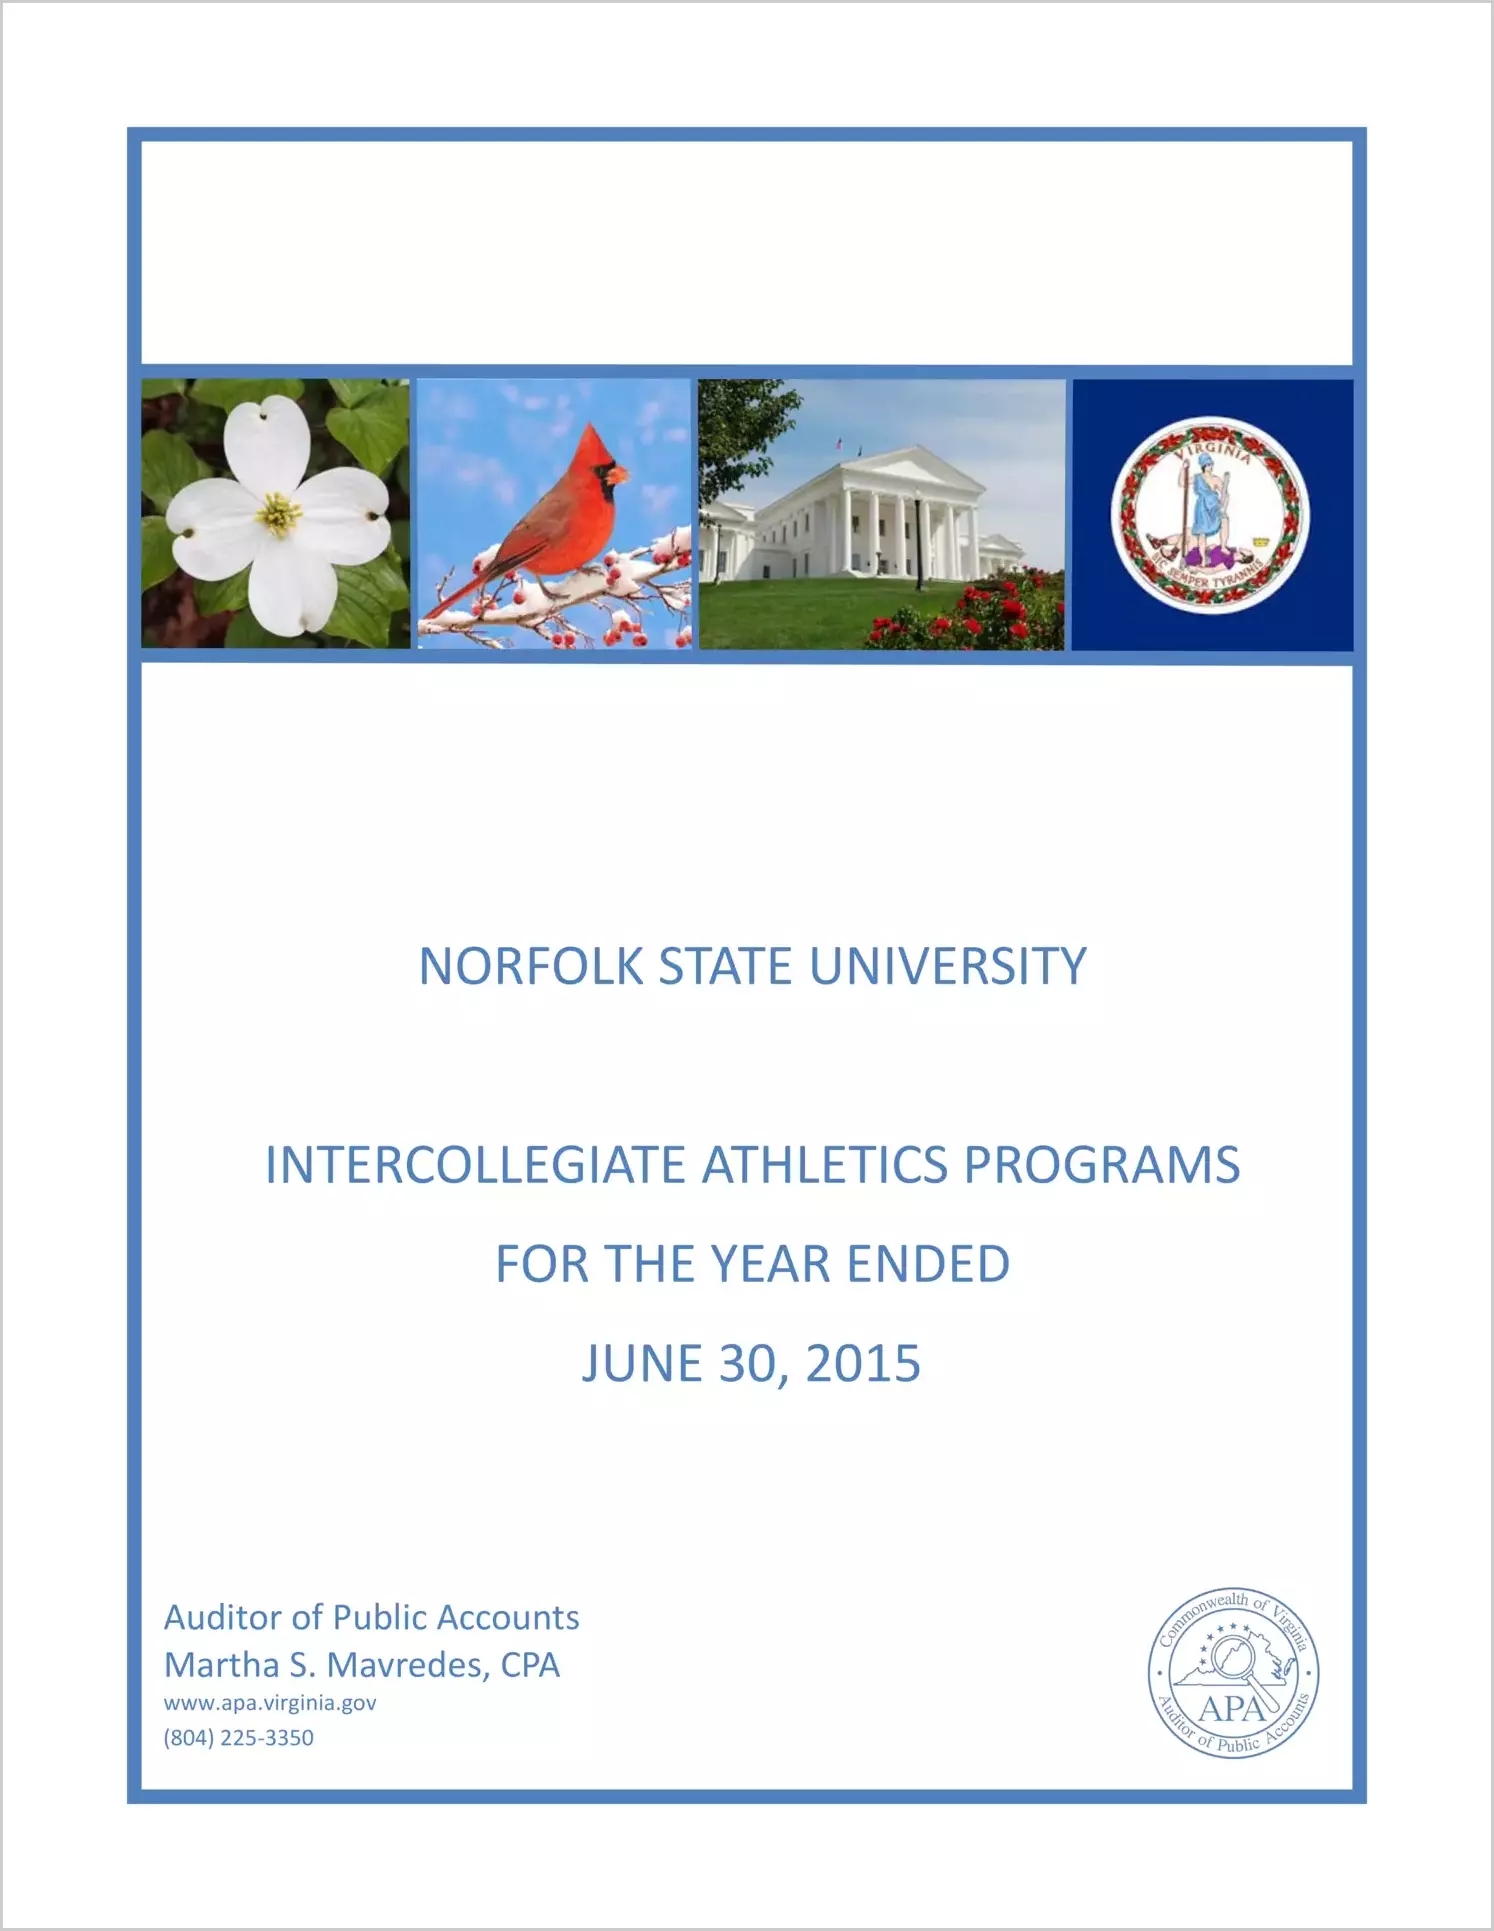 Norfolk State University Intercollegiate Athletics Programs for the year ended June 30, 2015